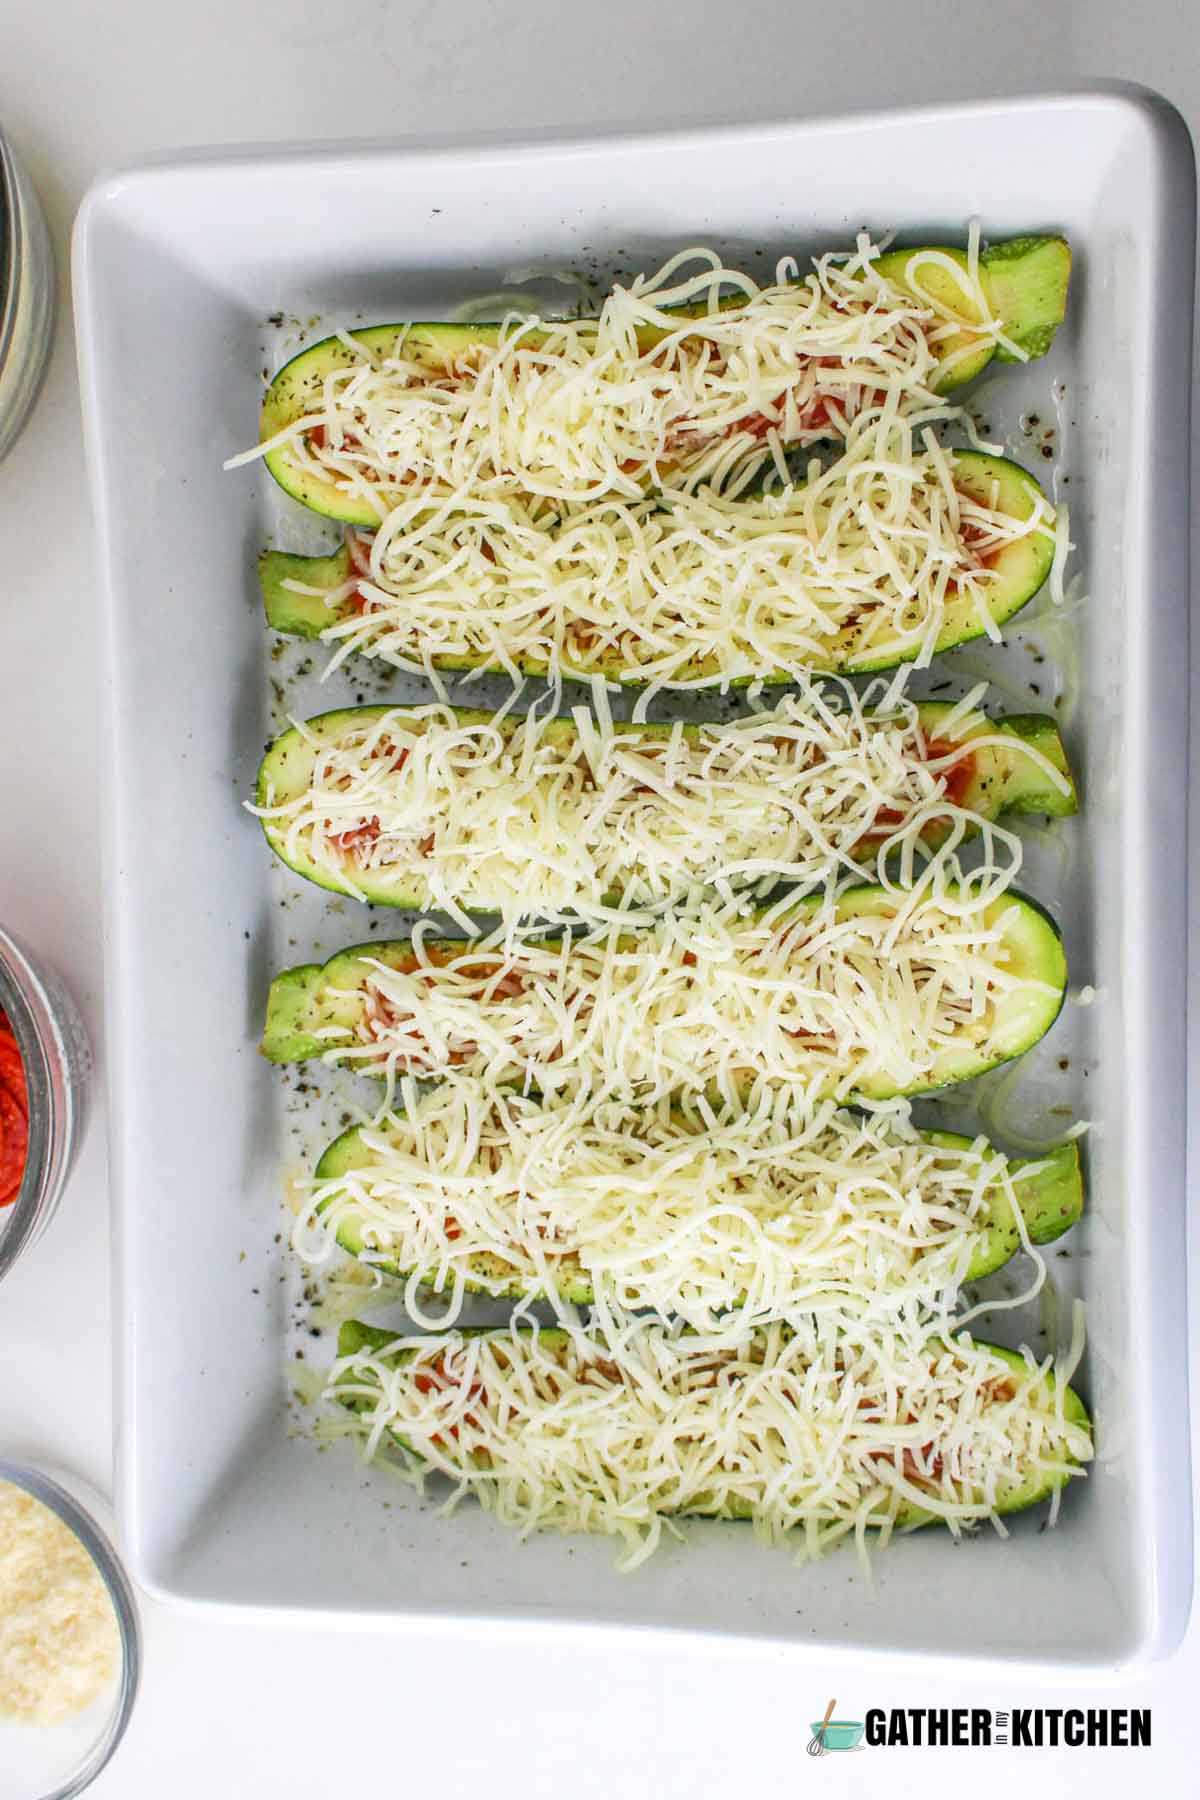 Shredded mozzarella sprinkled on top of zucchini.